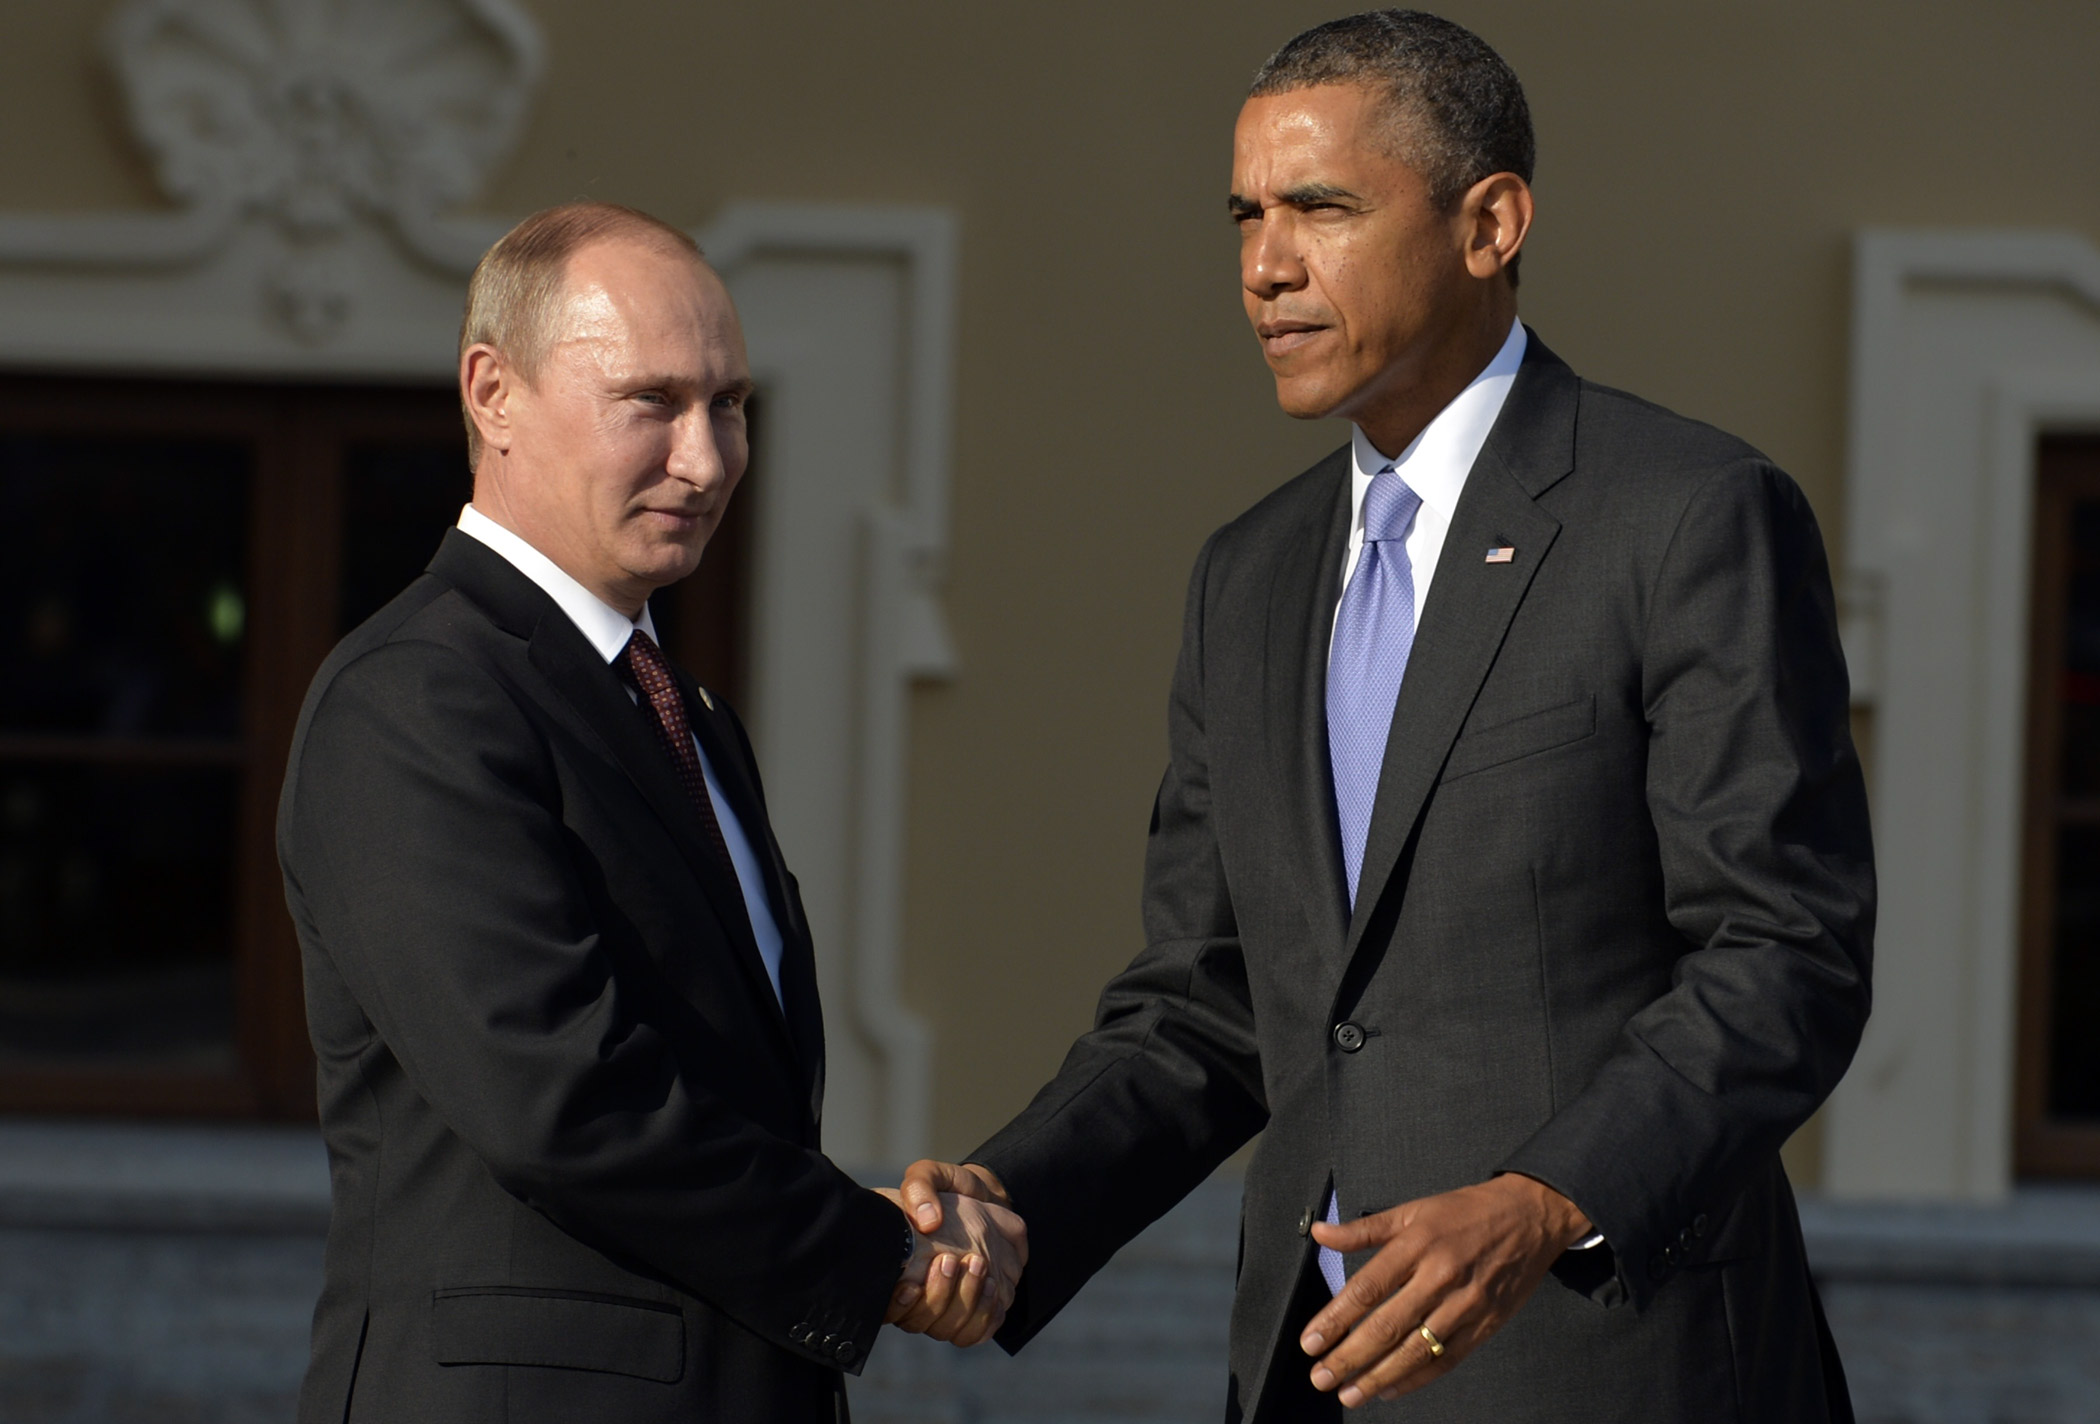 Russian President Vladimir Putin and U.S. President Barack Obama shake hands at the G20 summit in Saint Petersburg on Sept. 5, 2013.